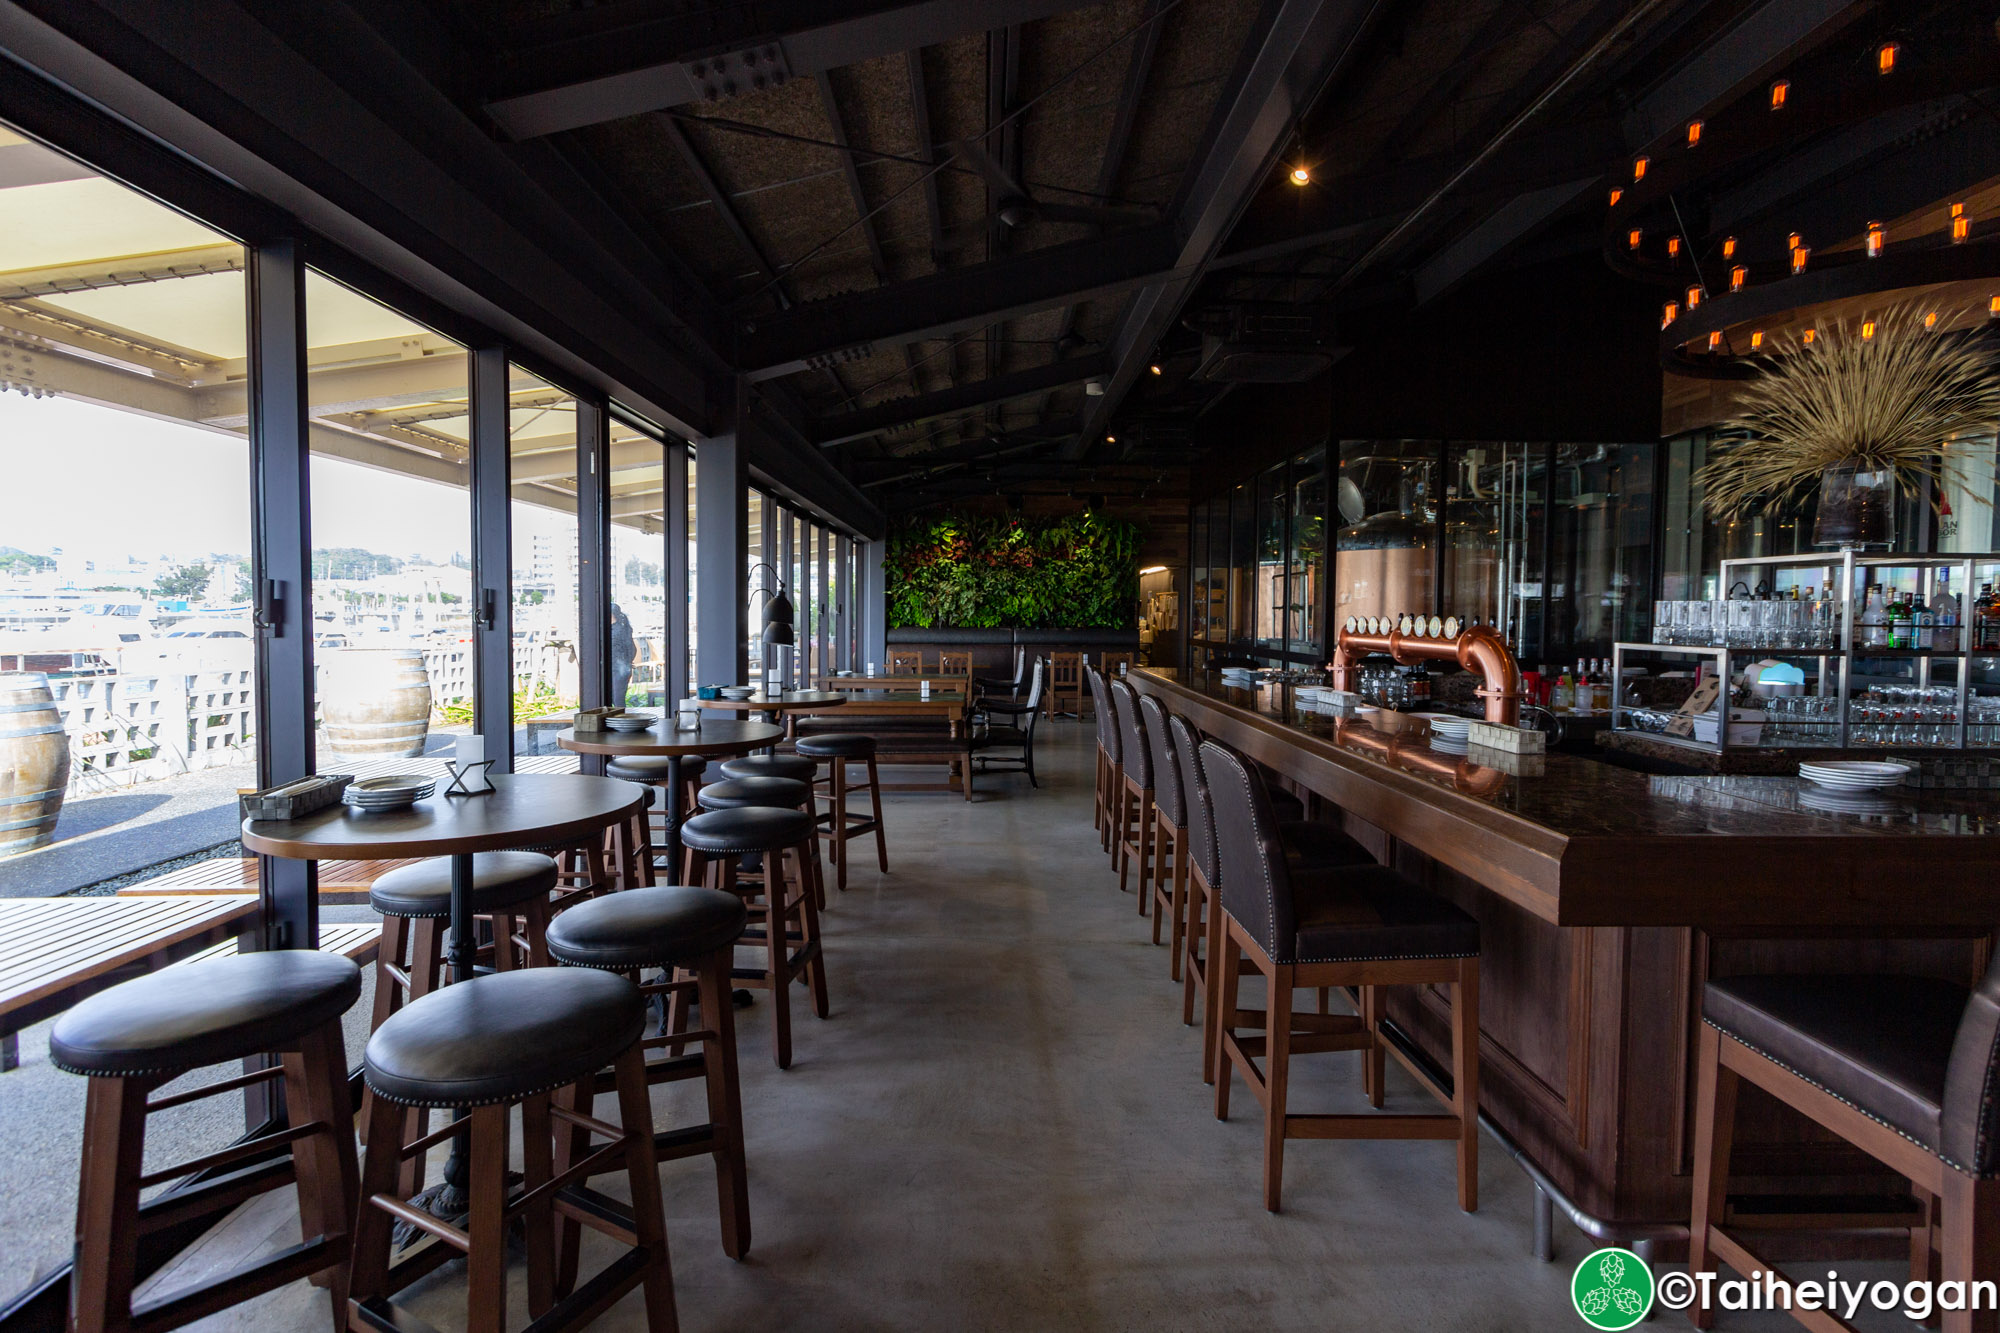 Chatan Harbor Brewery - Interior - Bar Area - Bar Counter Seating